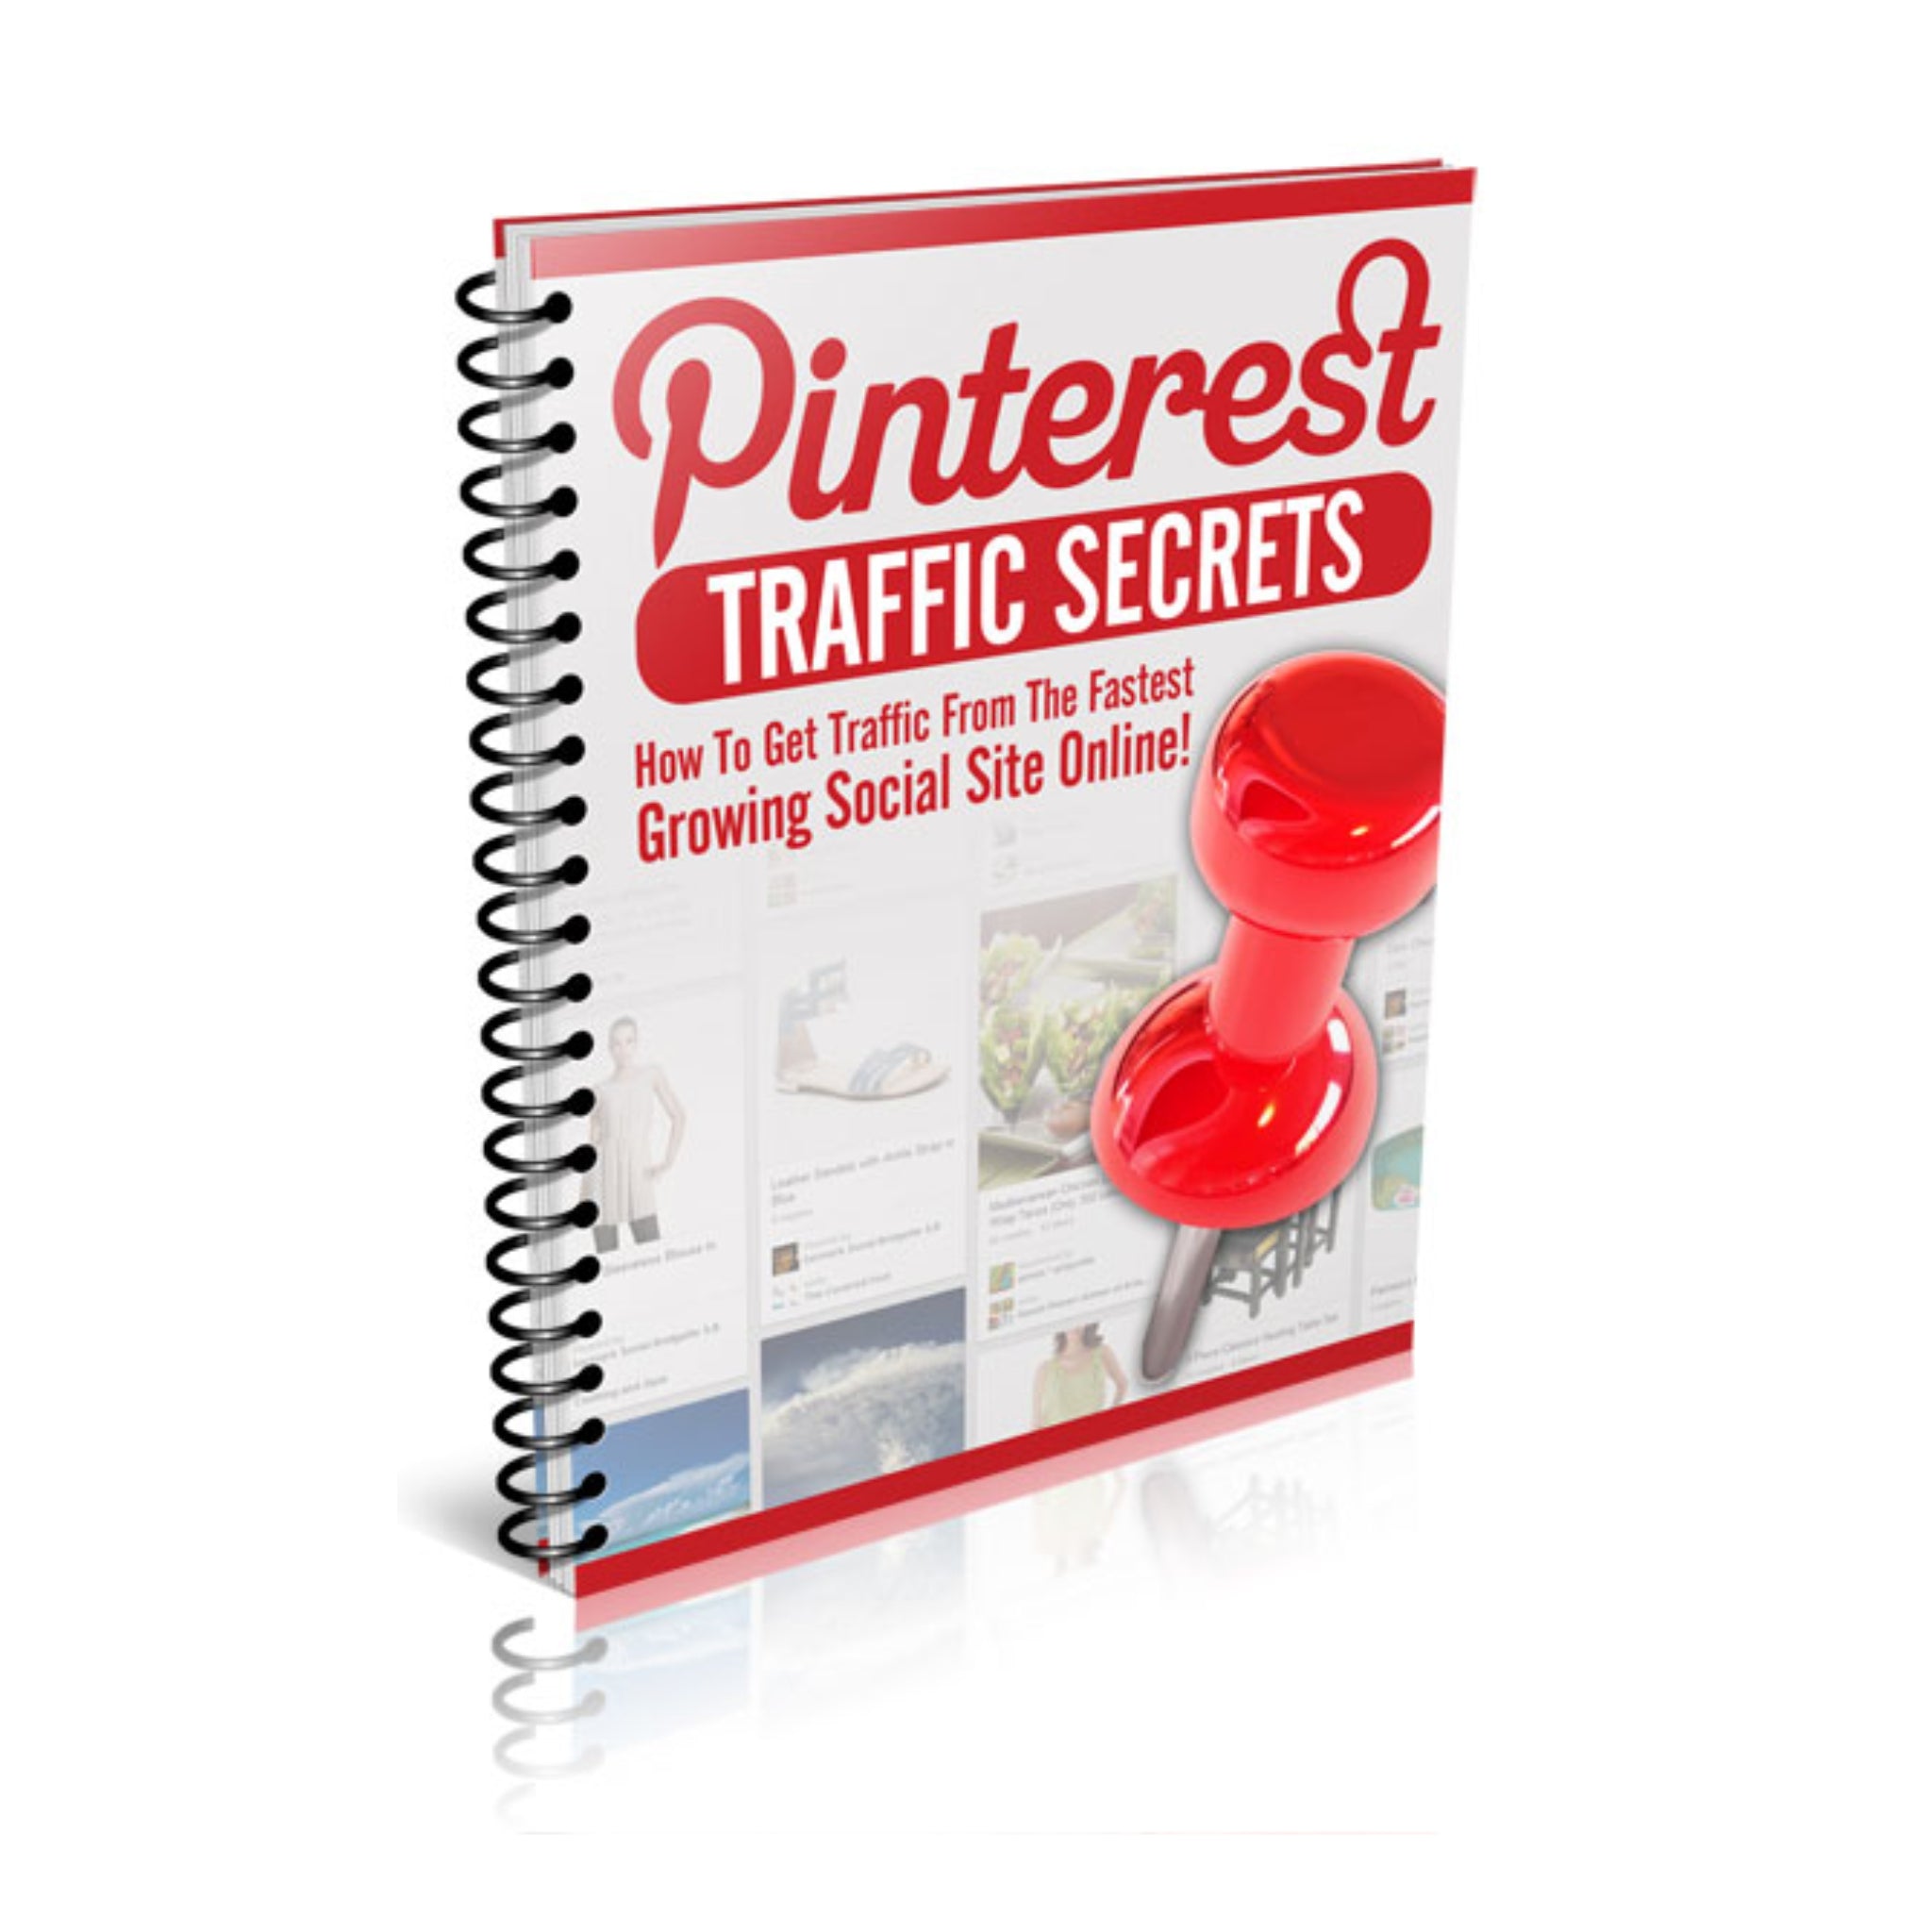 Pinterest Traffic Secrets Ebook